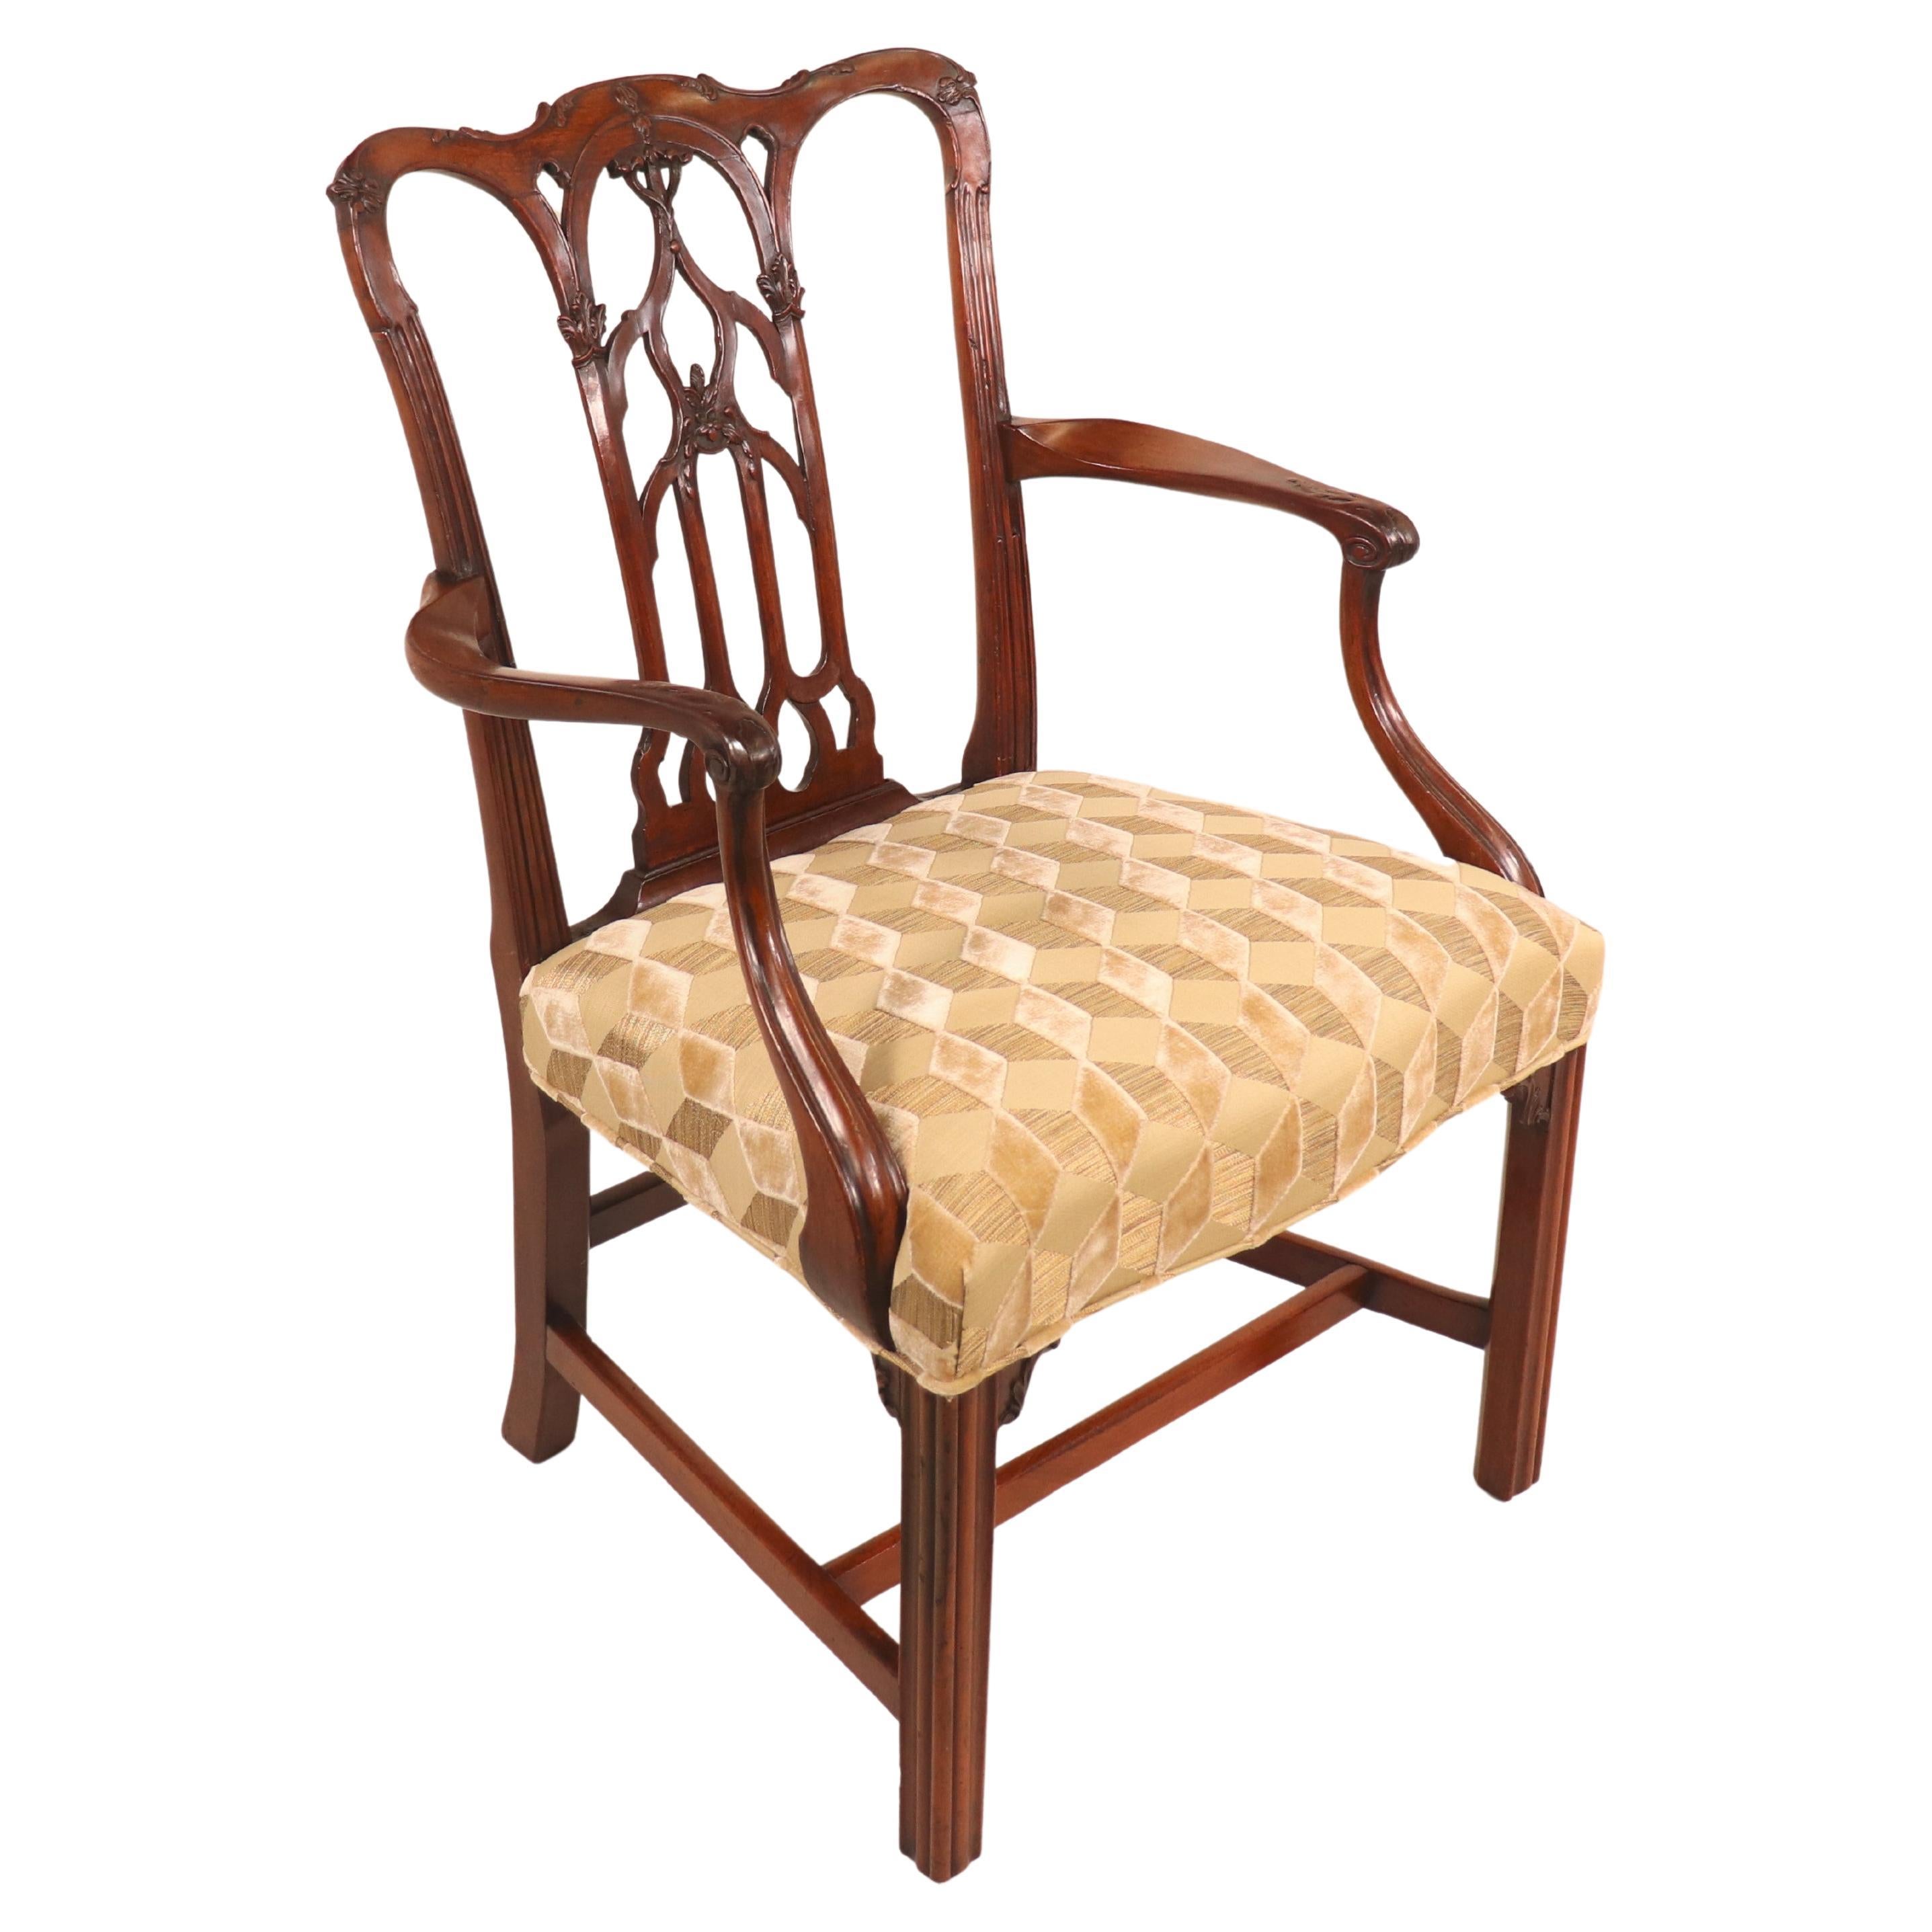 Circa 1750, fauteuil anglais d'époque géorgienne II en acajou avec tissu moderne en vente